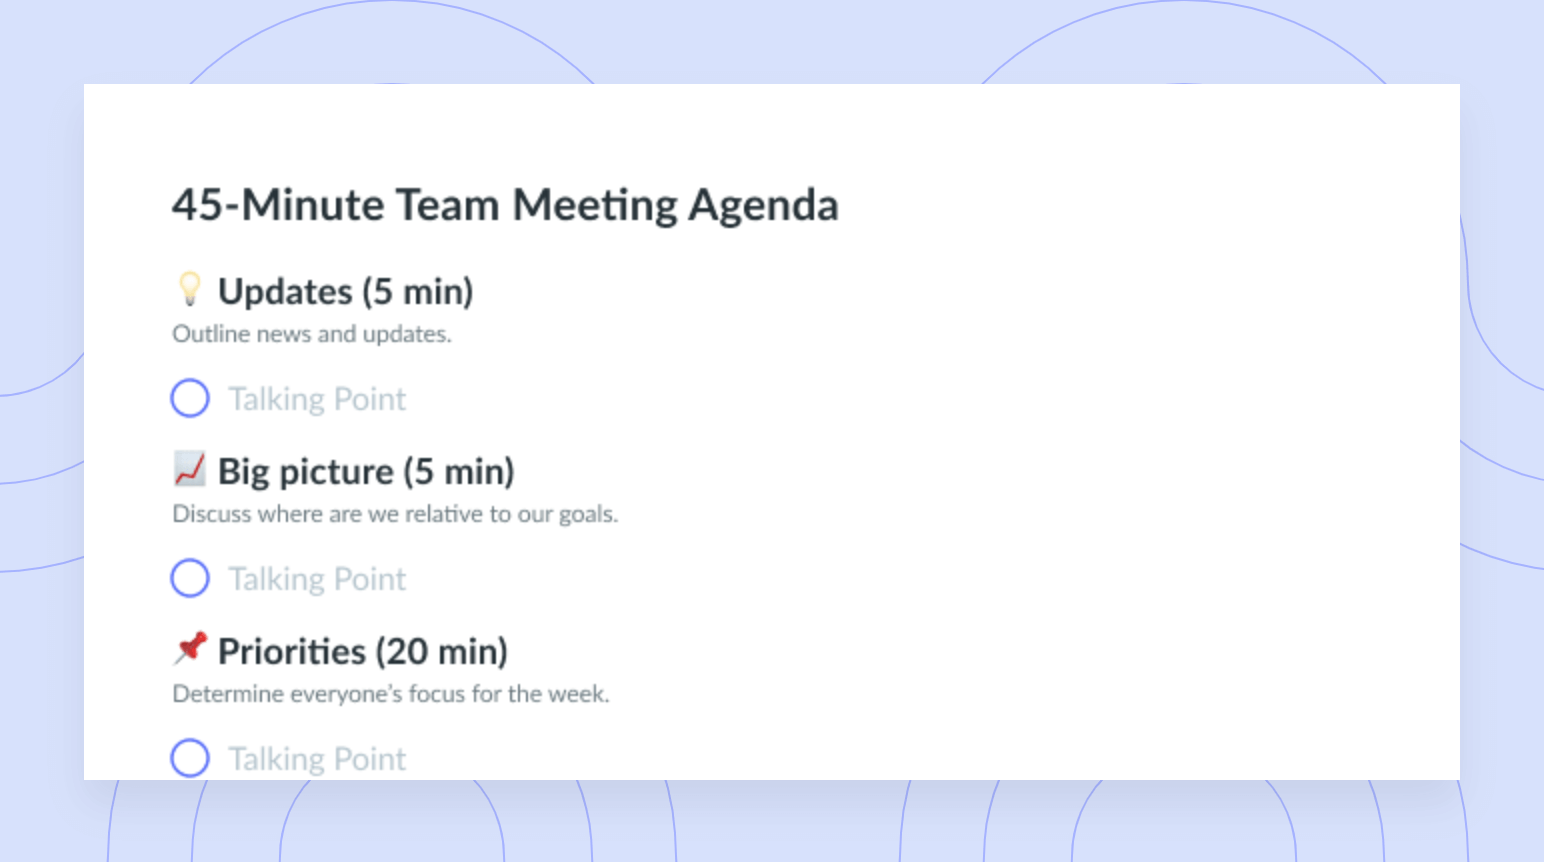 45-Minute Team Meeting Agenda Template